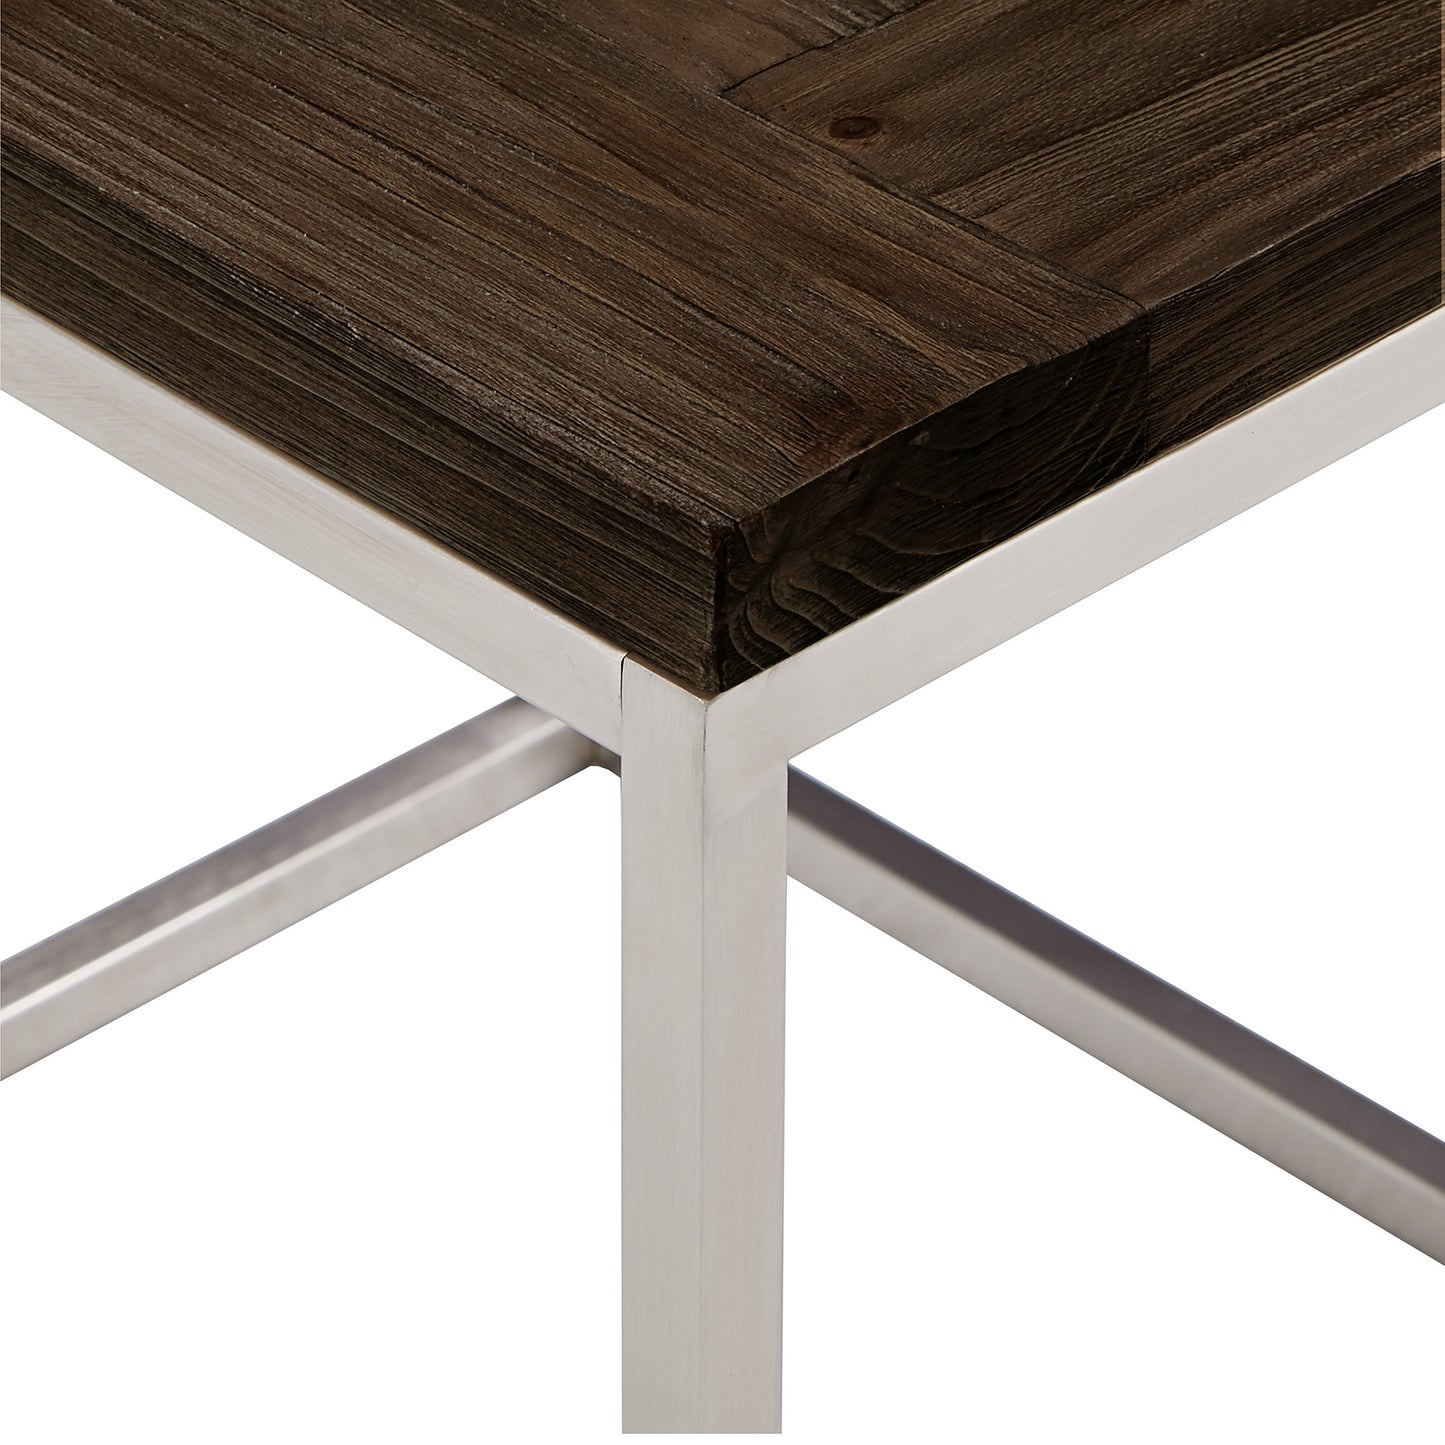 Stainless Steel Rectangular Sofa Table - Brown Finish